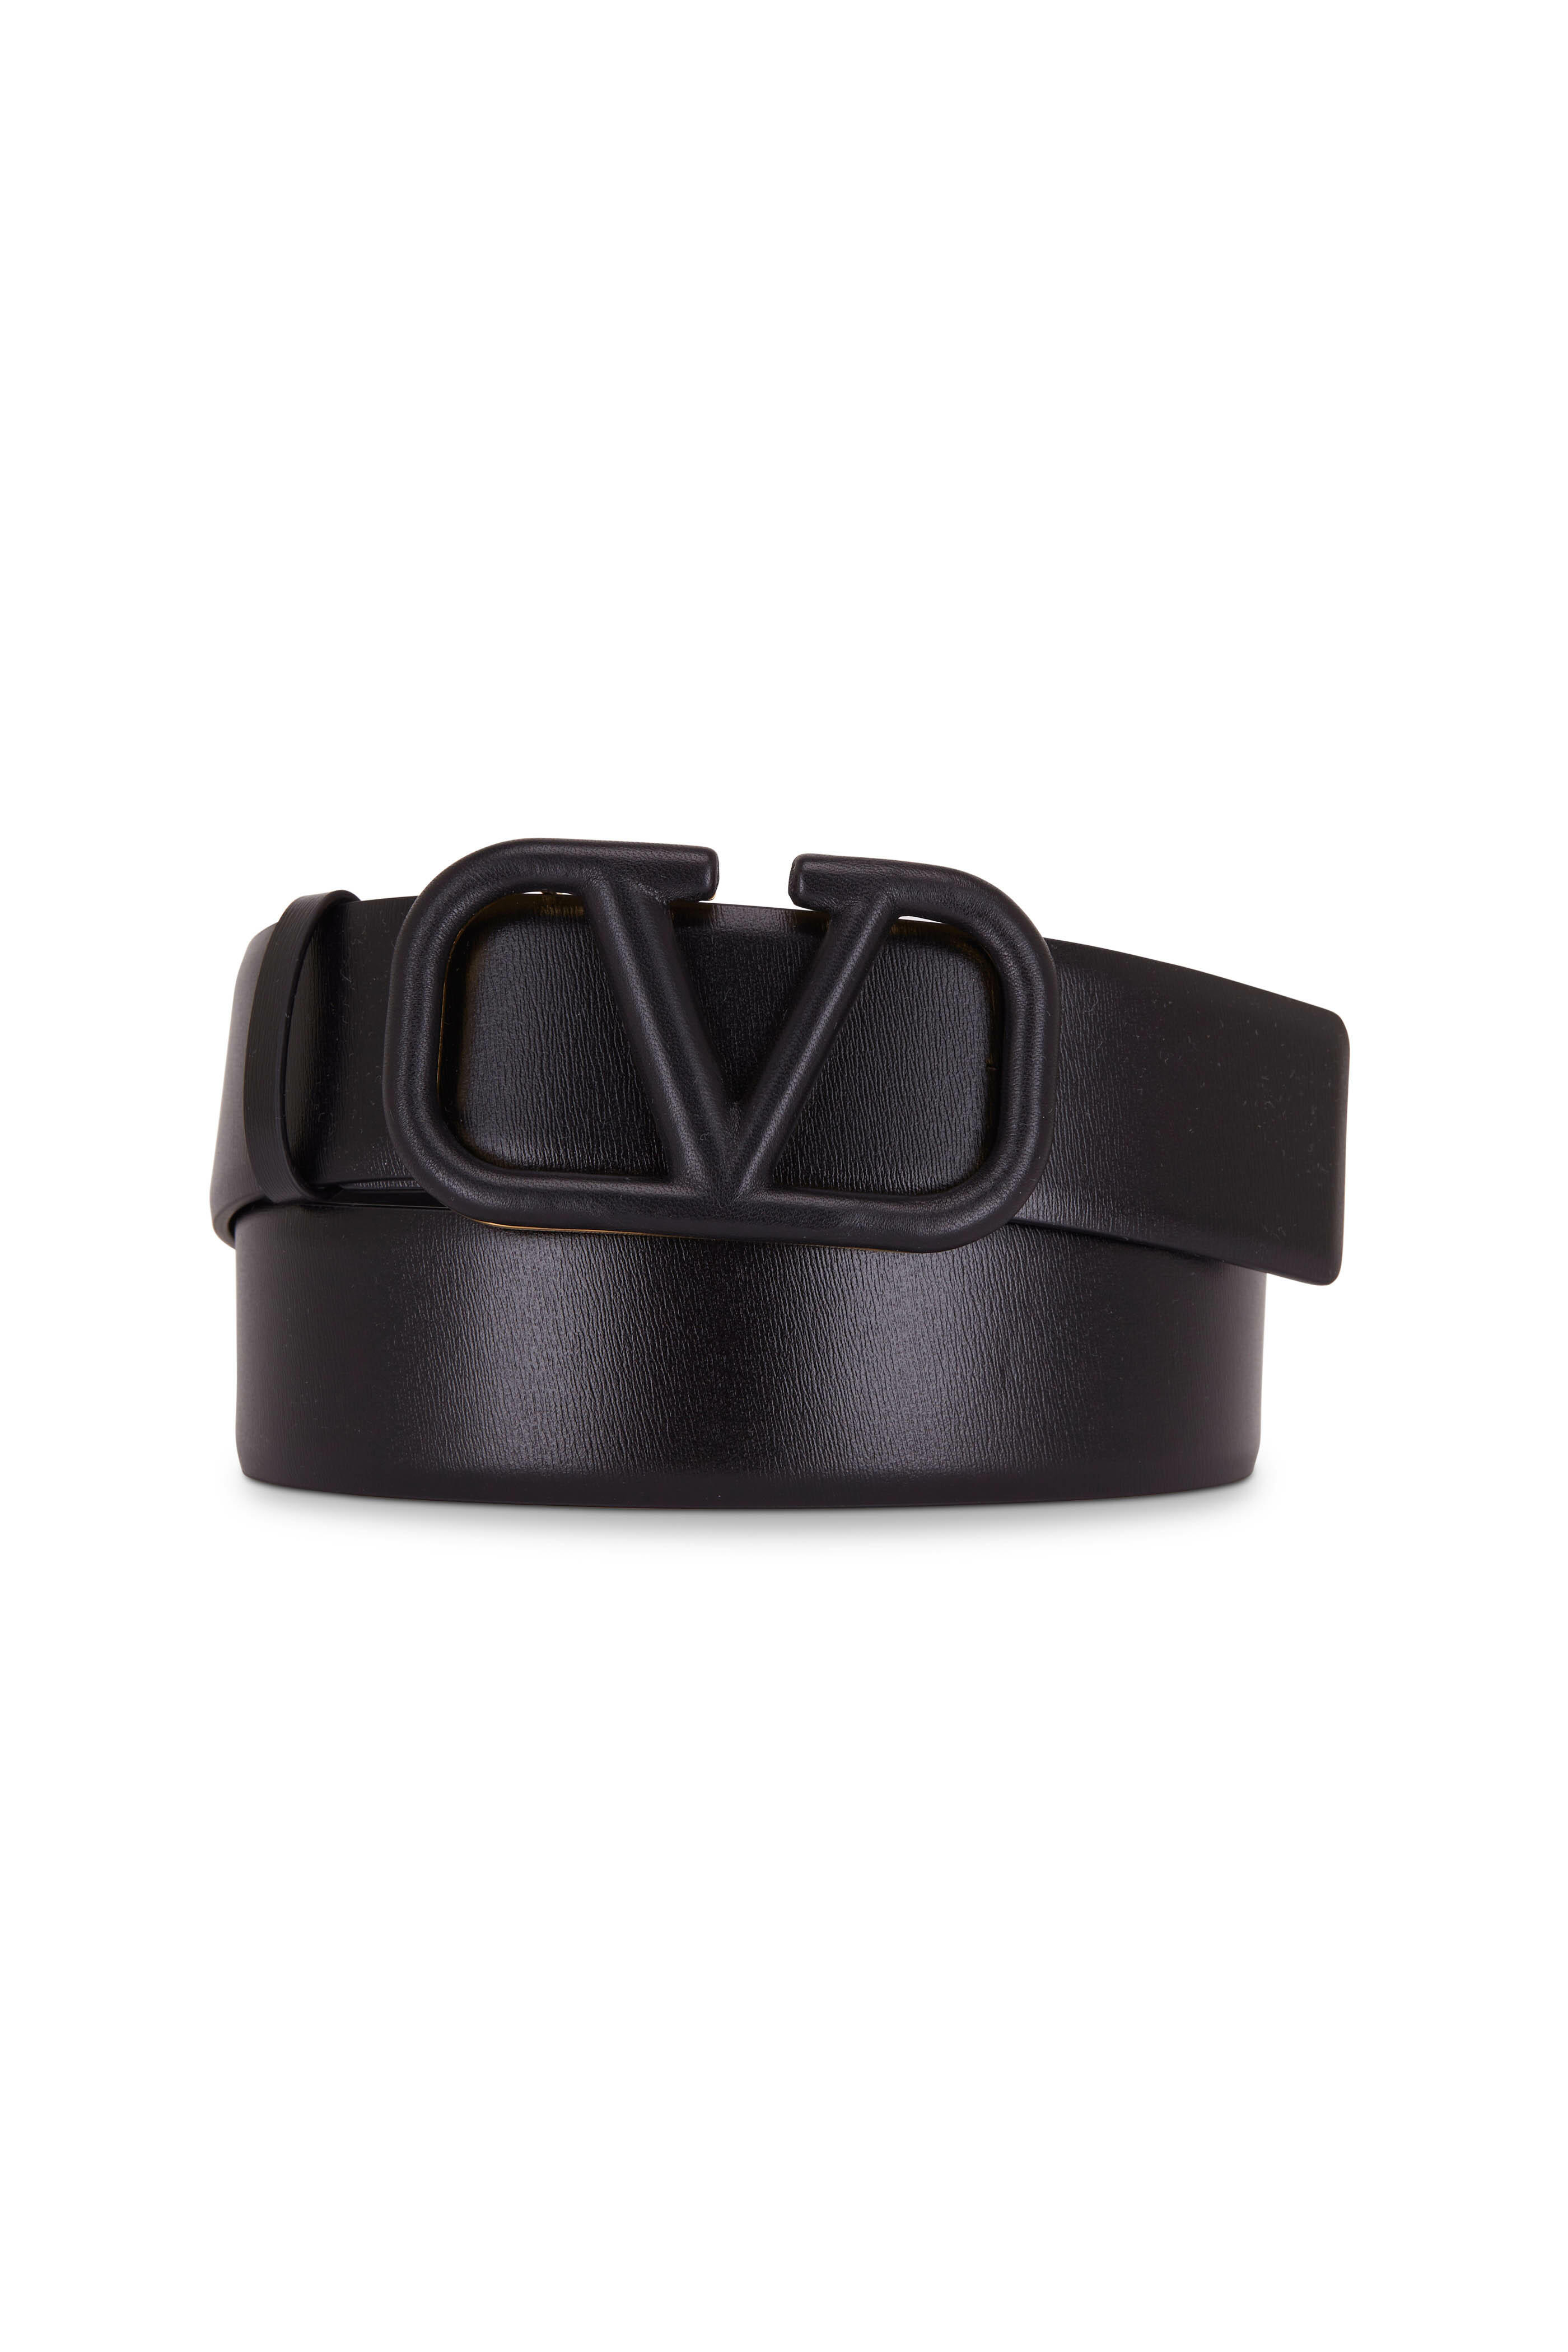 Unisex Black Leather Belt with Red Rhinestones 40